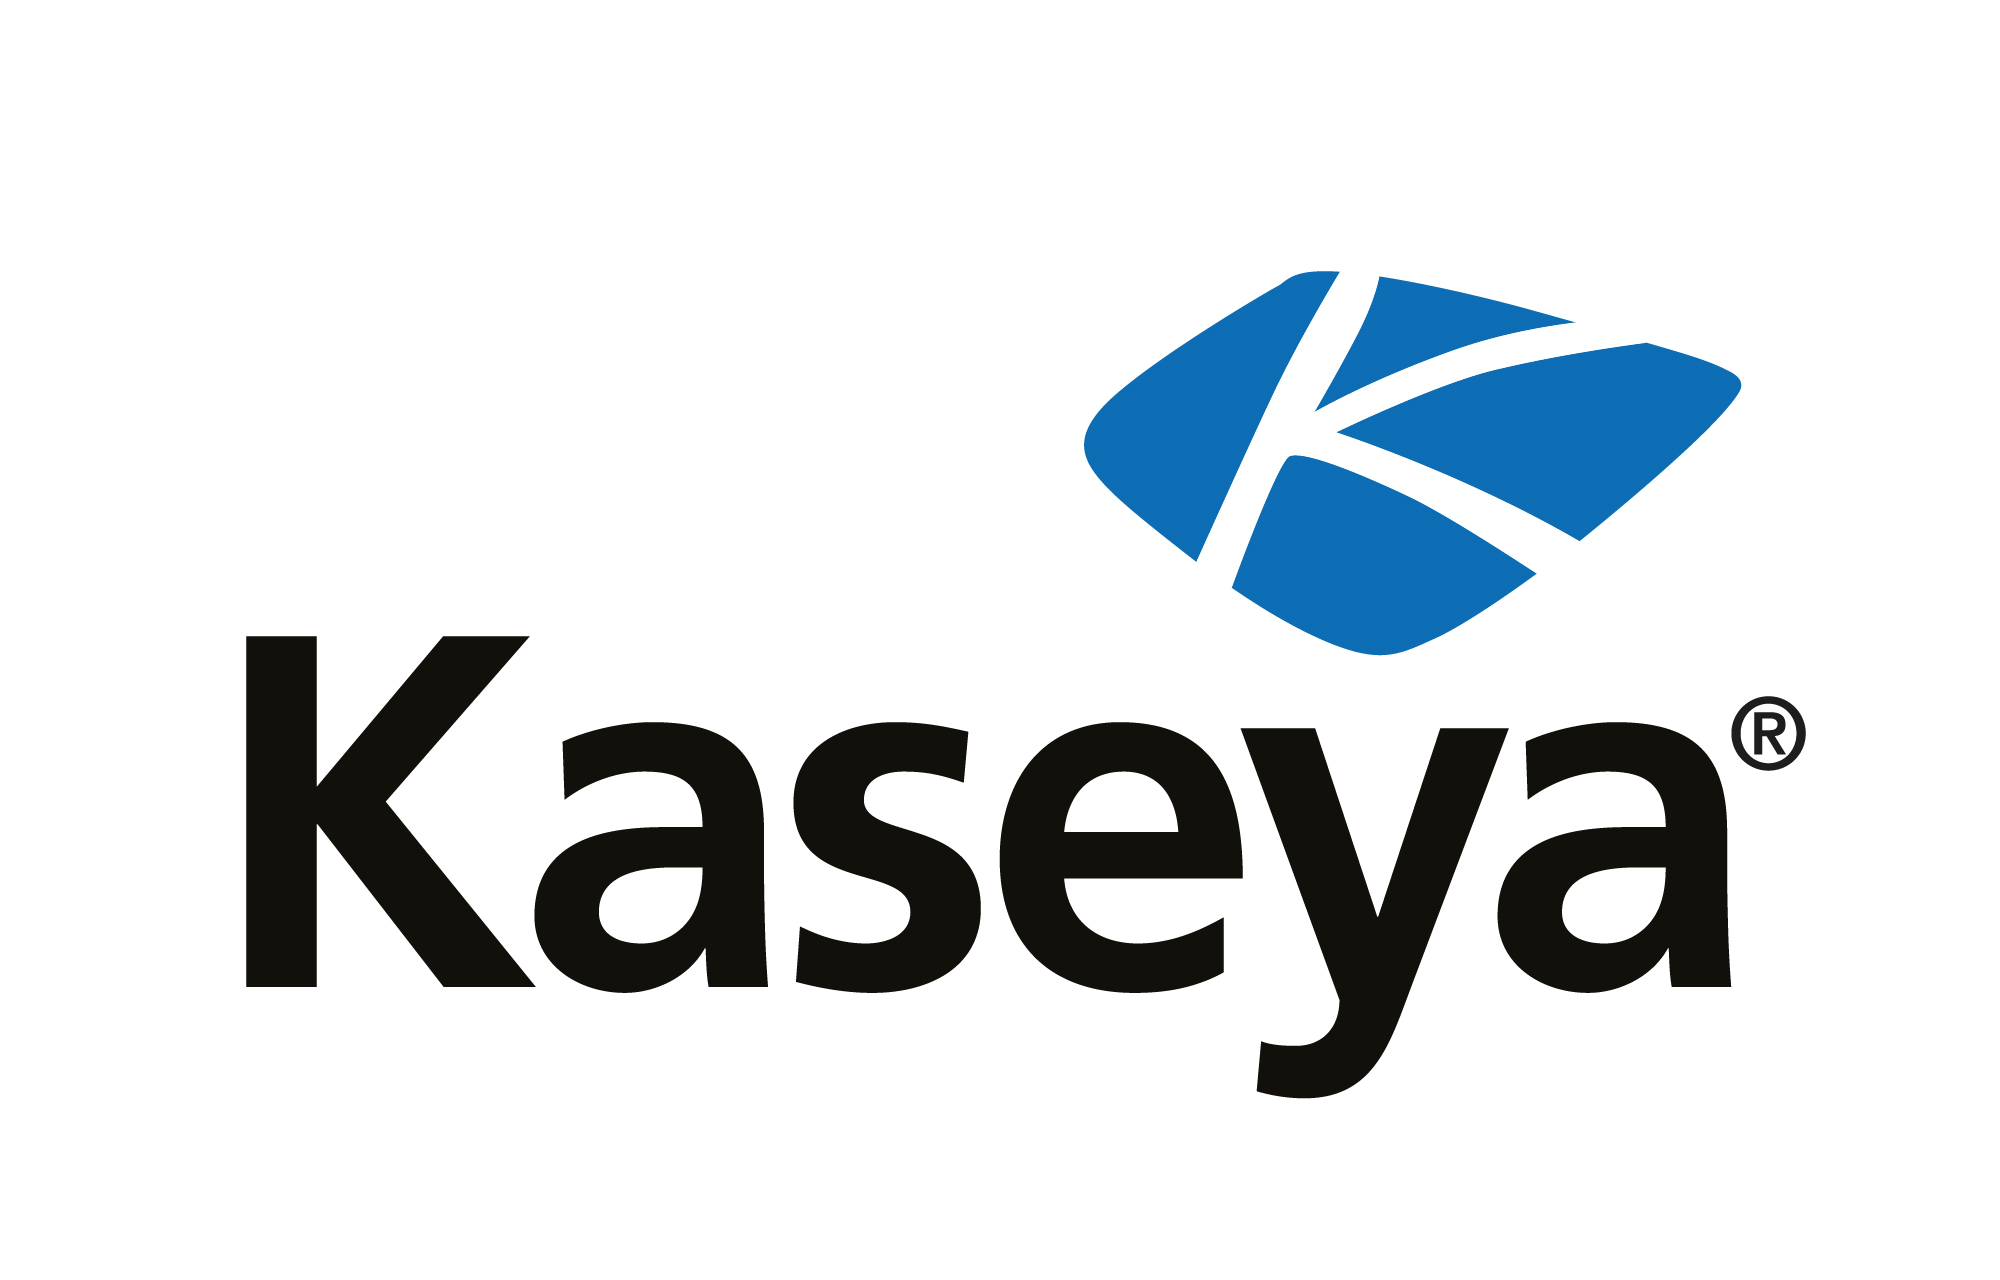 Kaseya integriert Xero, den führenden Anbieter cloudbasierter Buchhaltungssoftware